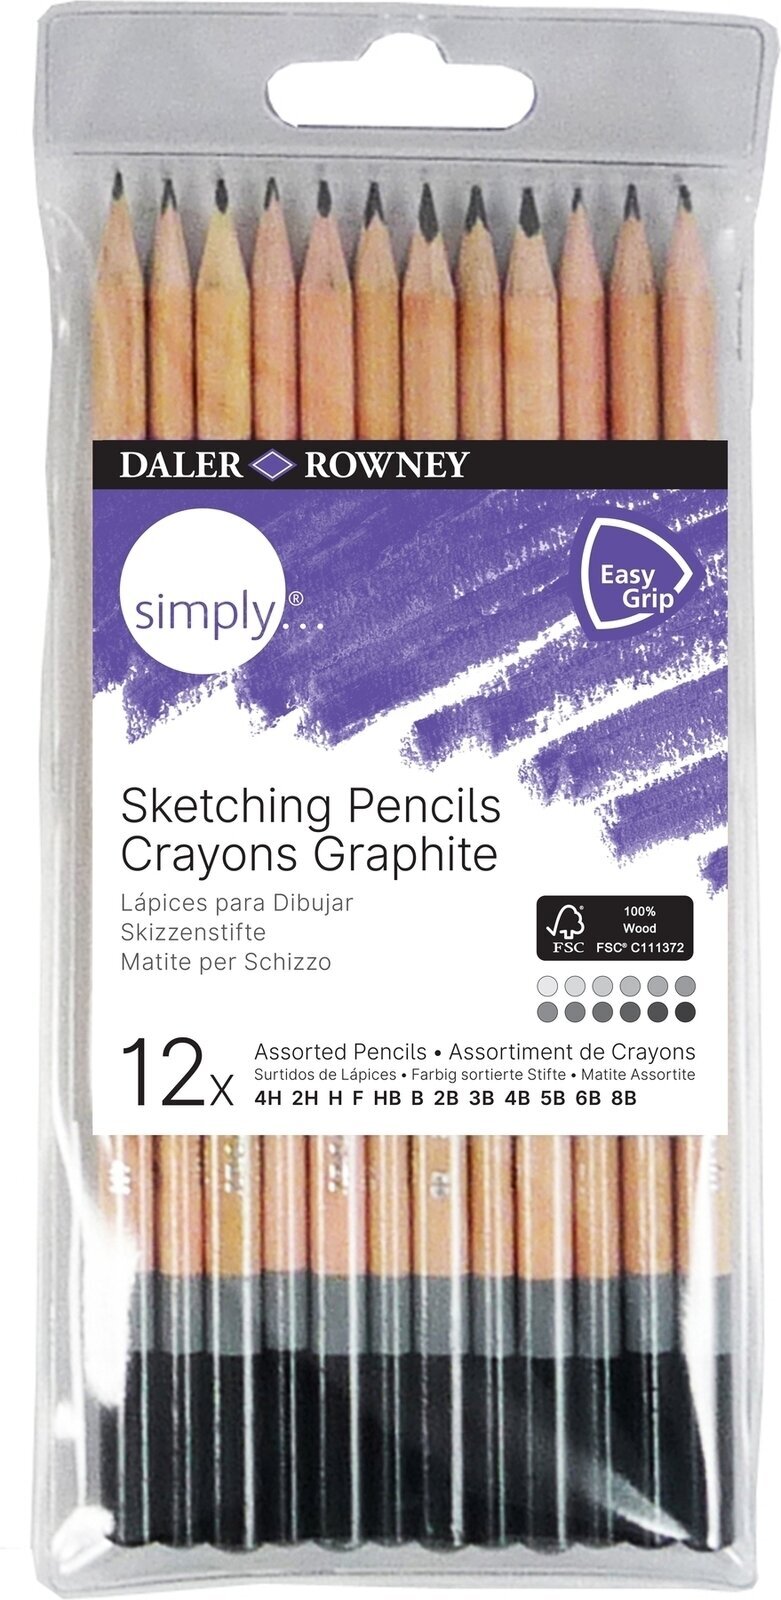 Crayon graphite Daler Rowney Simply Sketching Pencils Coffret crayons d'artiste 12 pièces